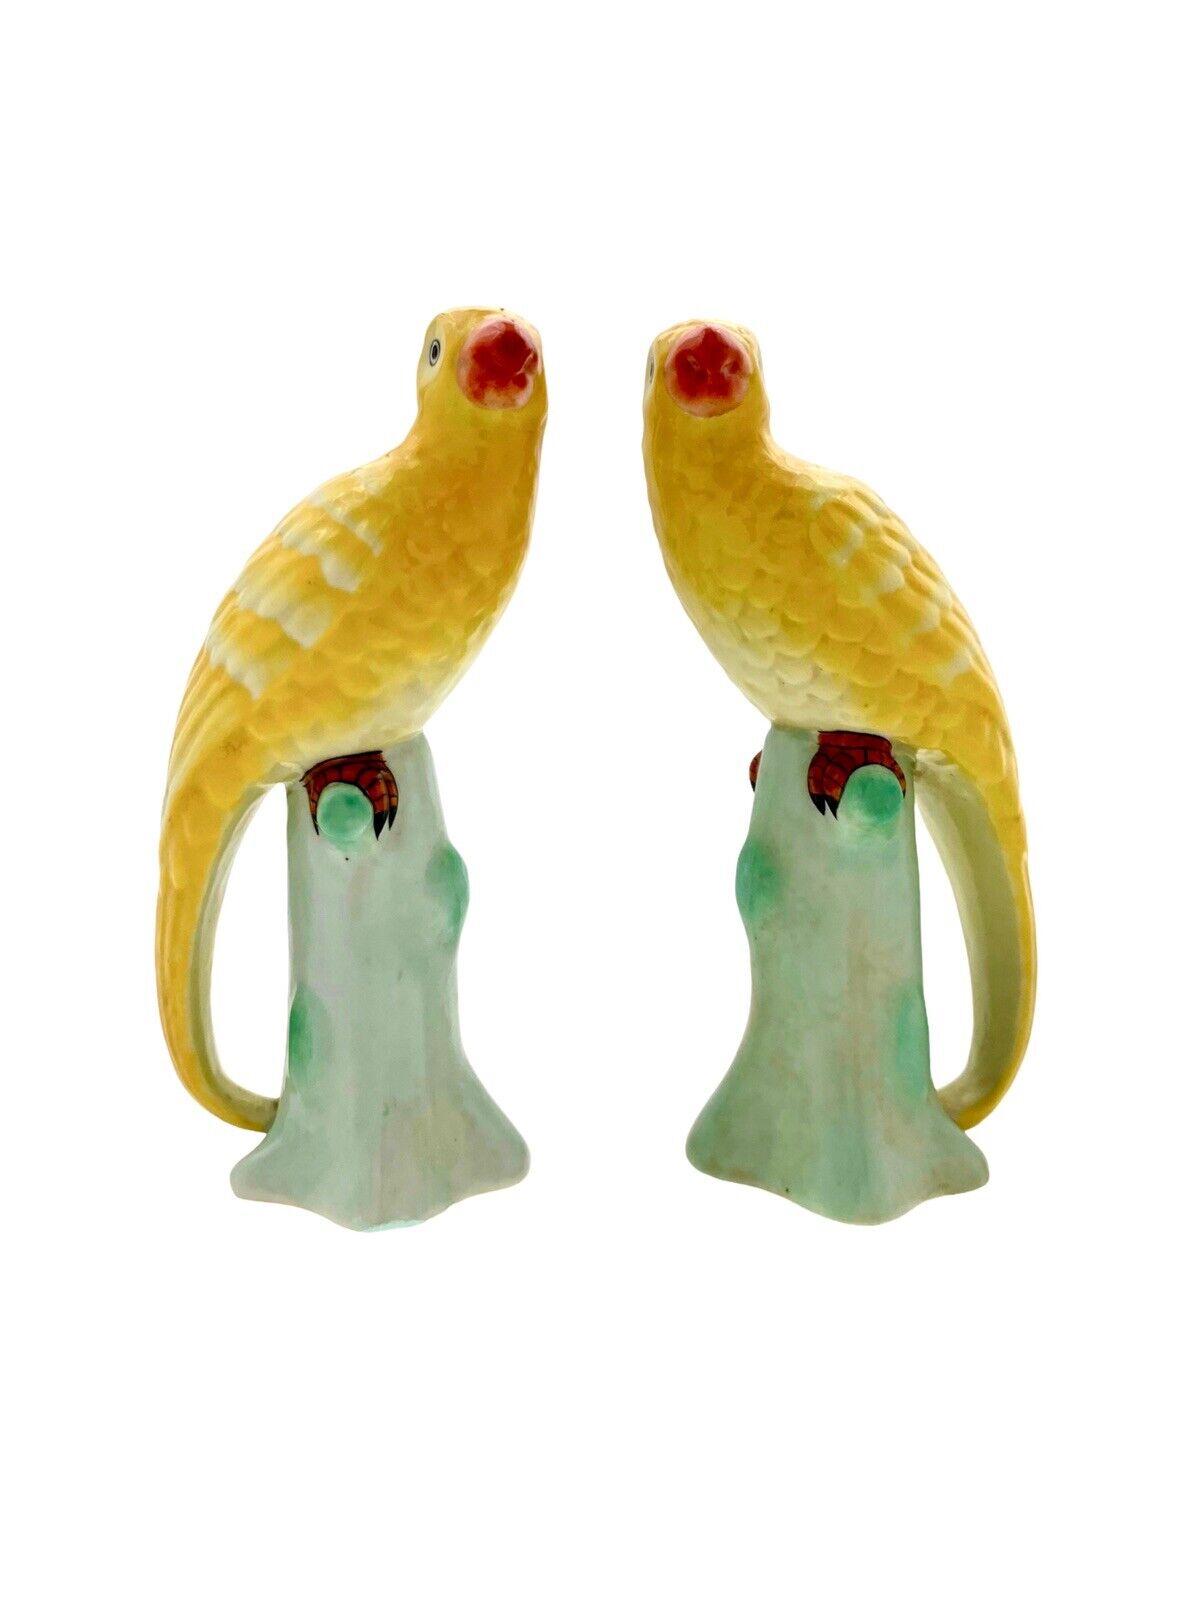 Tropical Yellow Bird Figurine Pair Ceramic Vintage Oriental Asian Decor